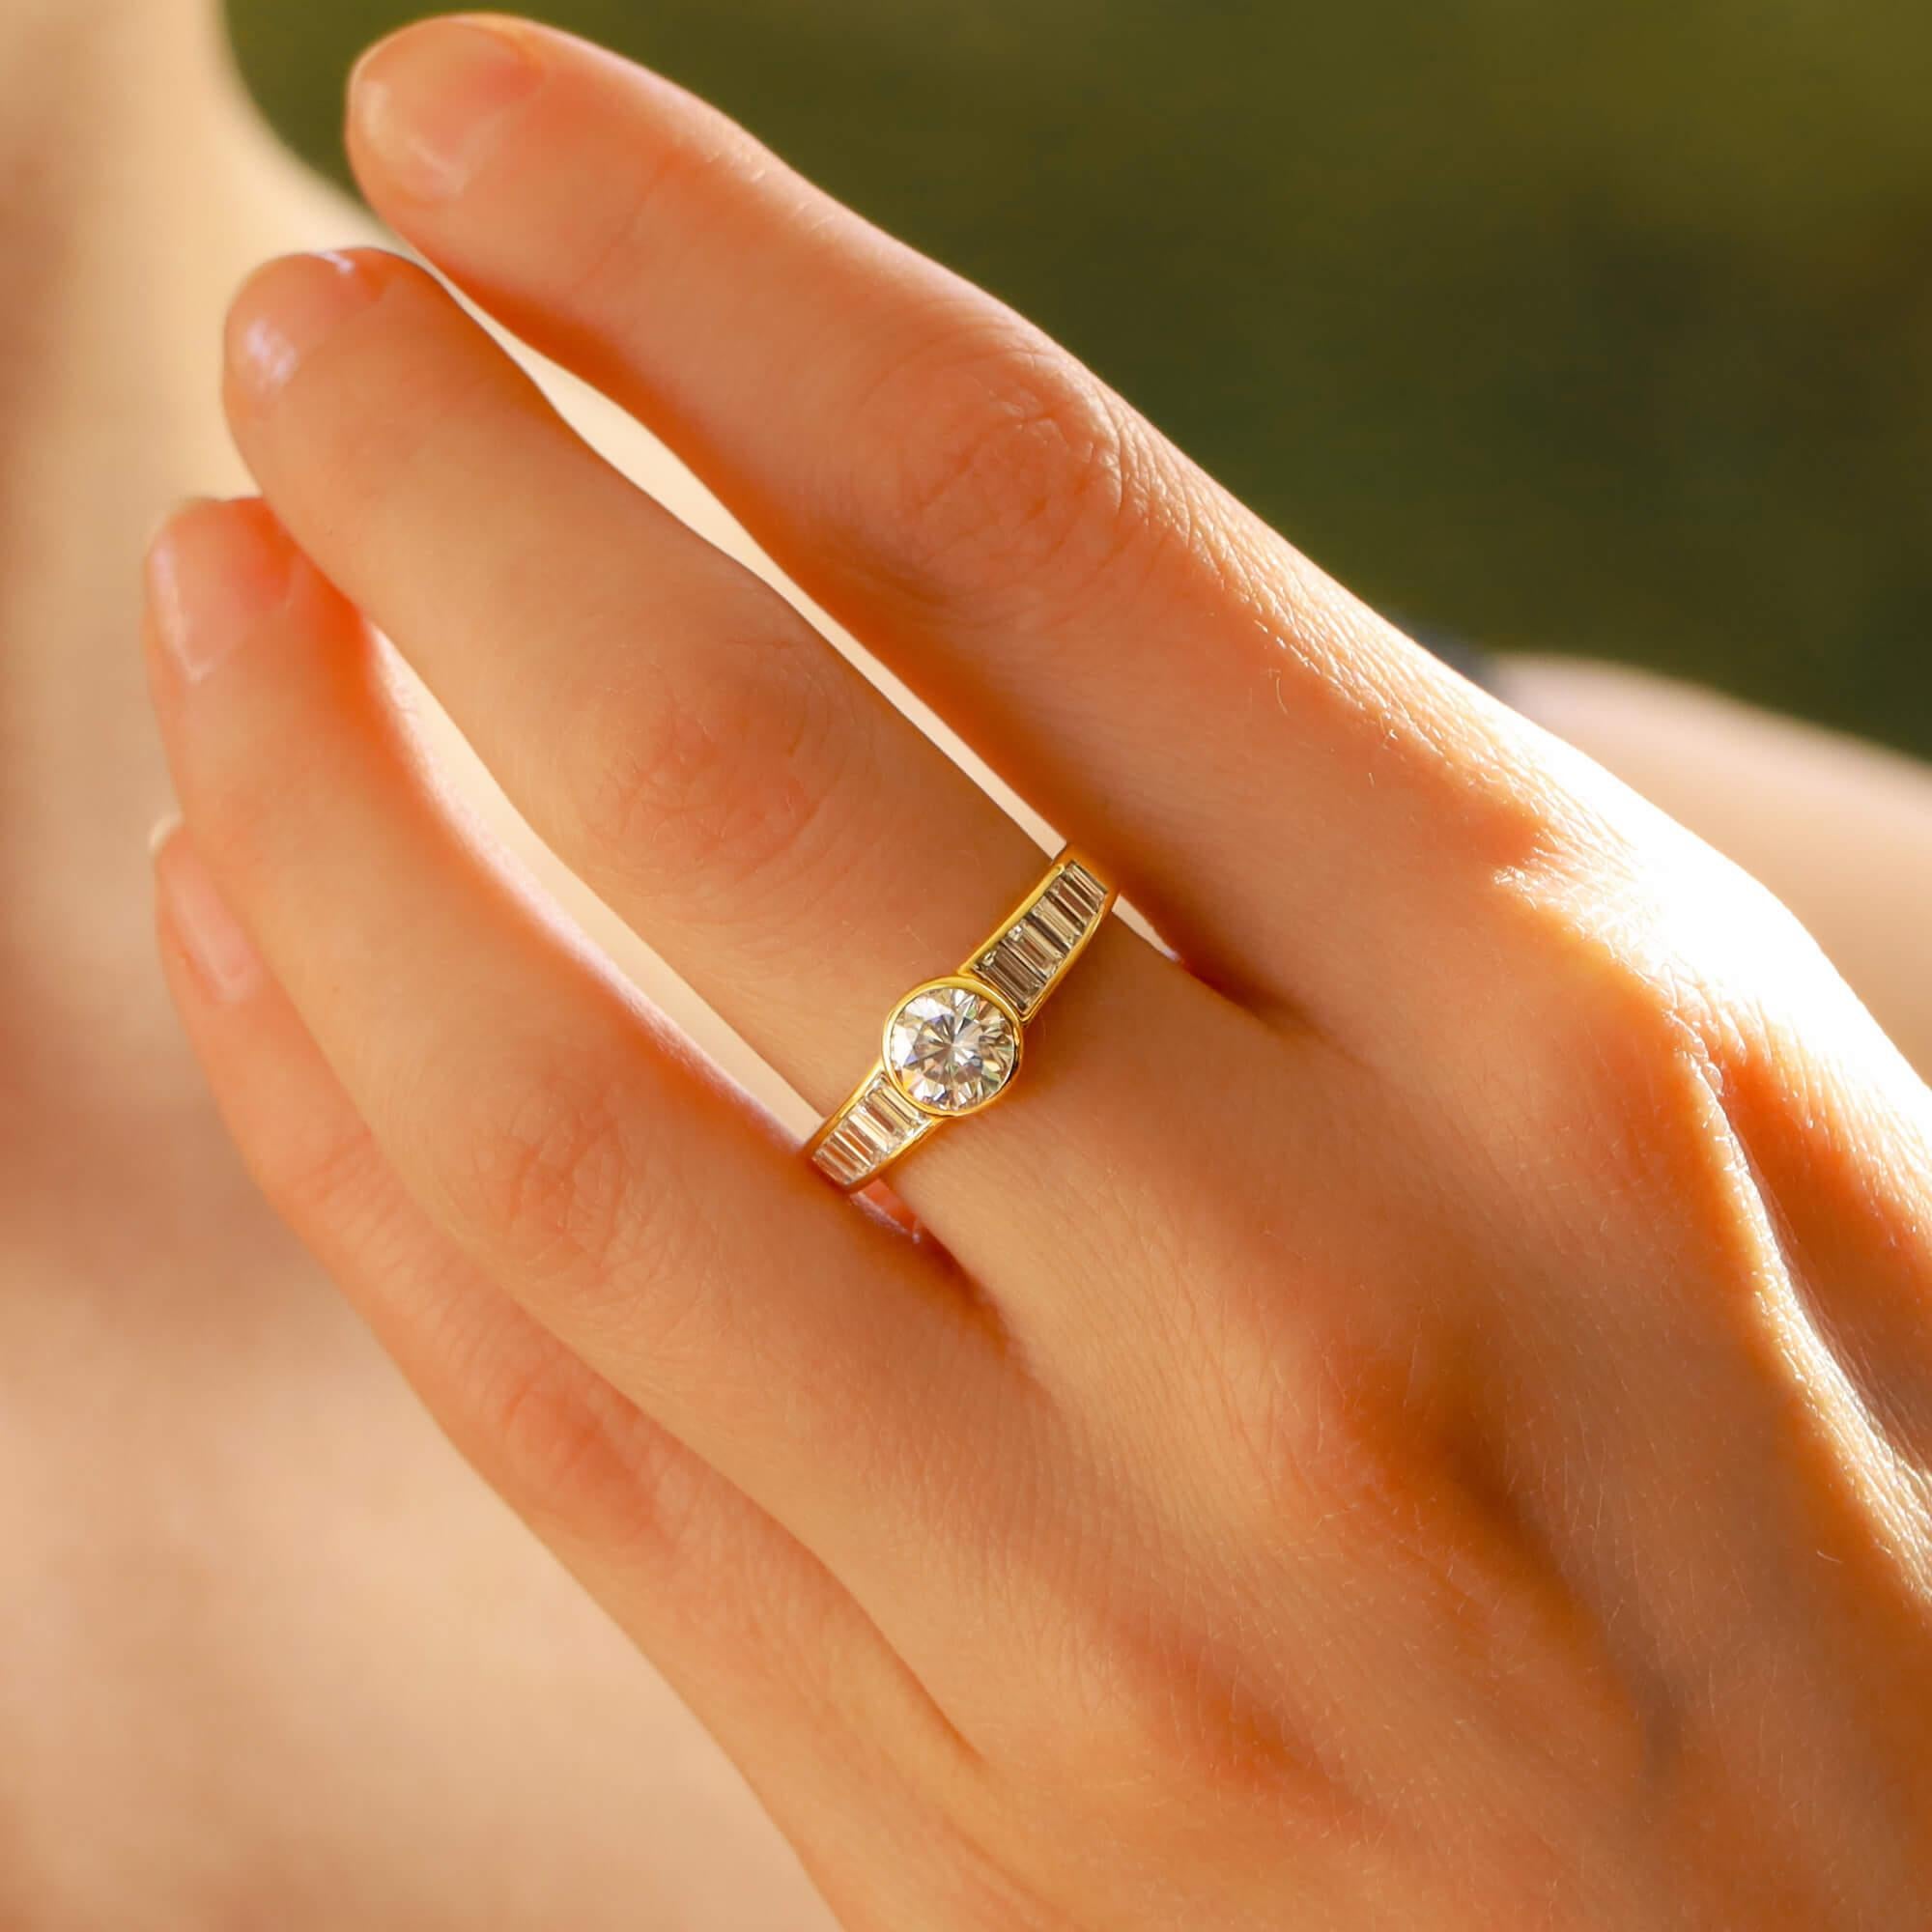 Baguette Cut Art Deco Style Diamond Engagement Ring Set in 18k Yellow Gold